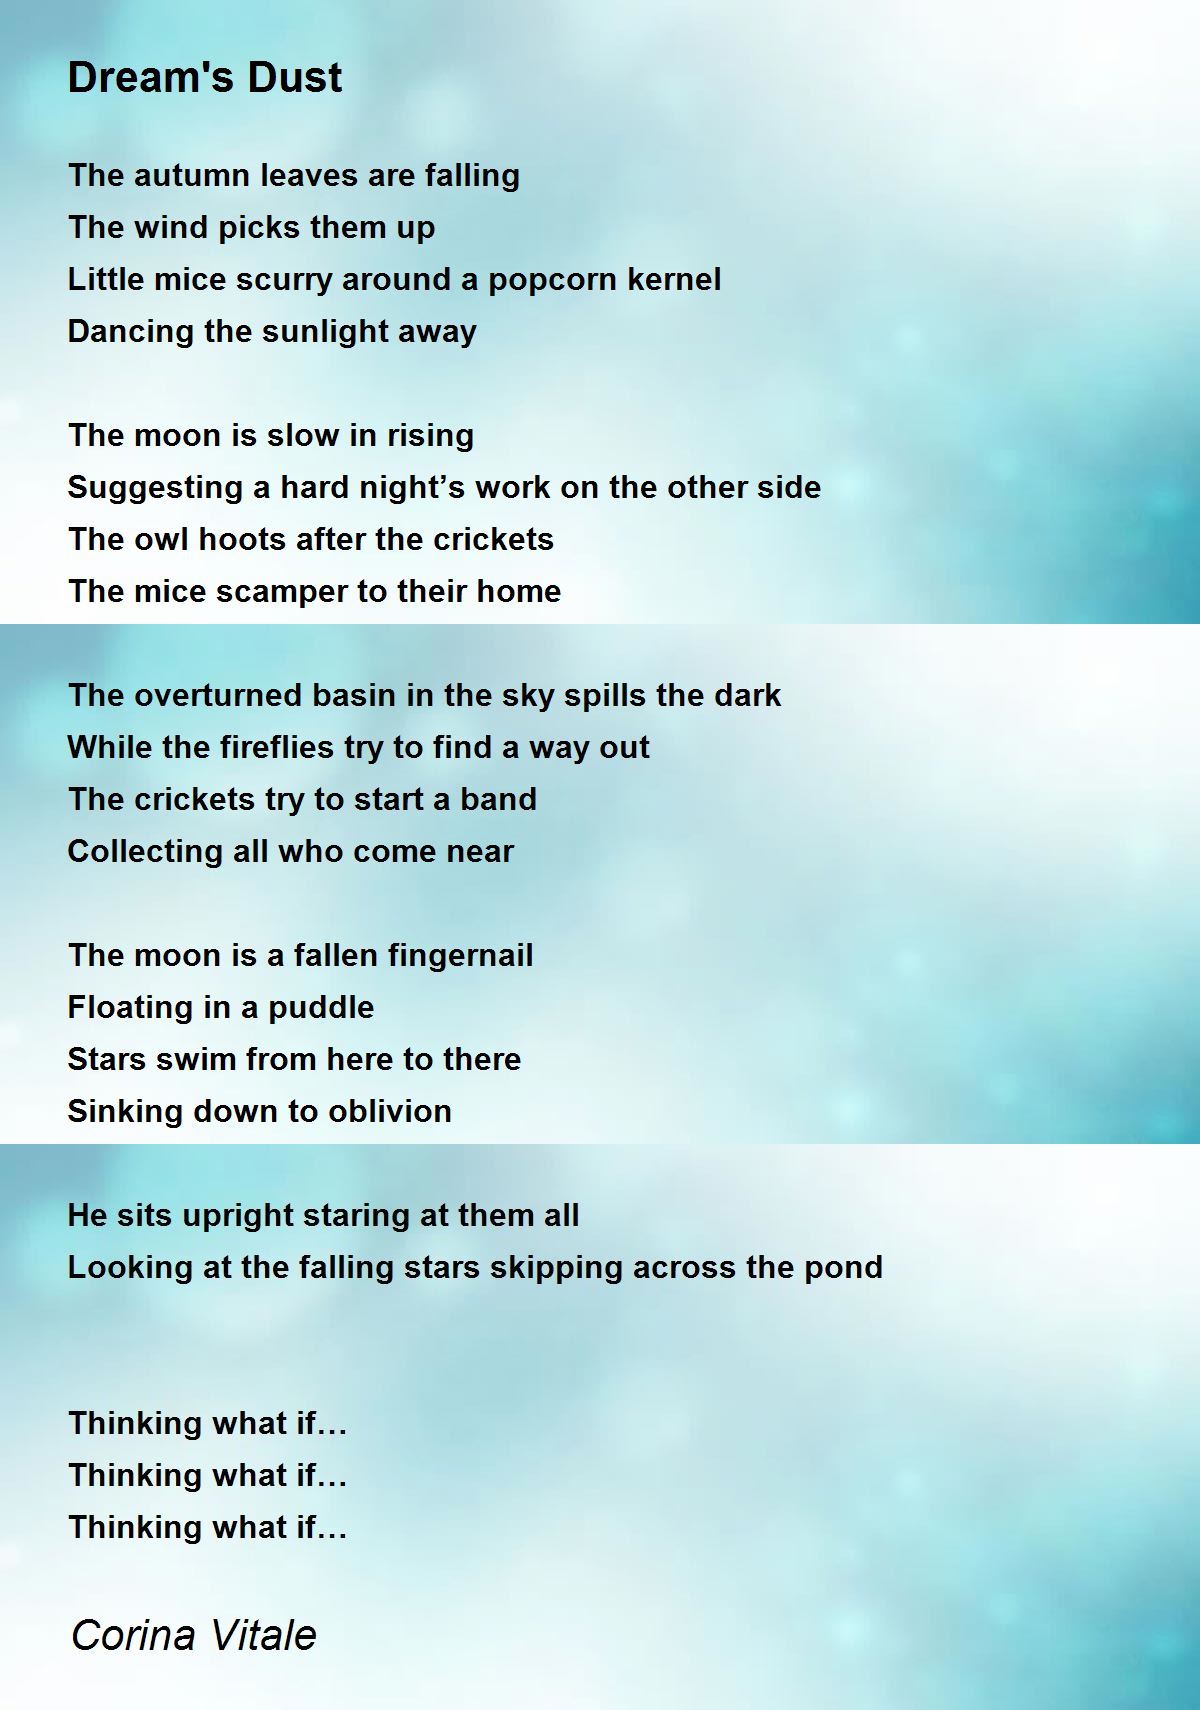 Dream's Dust - Dream's Dust Poem by Corina Vitale